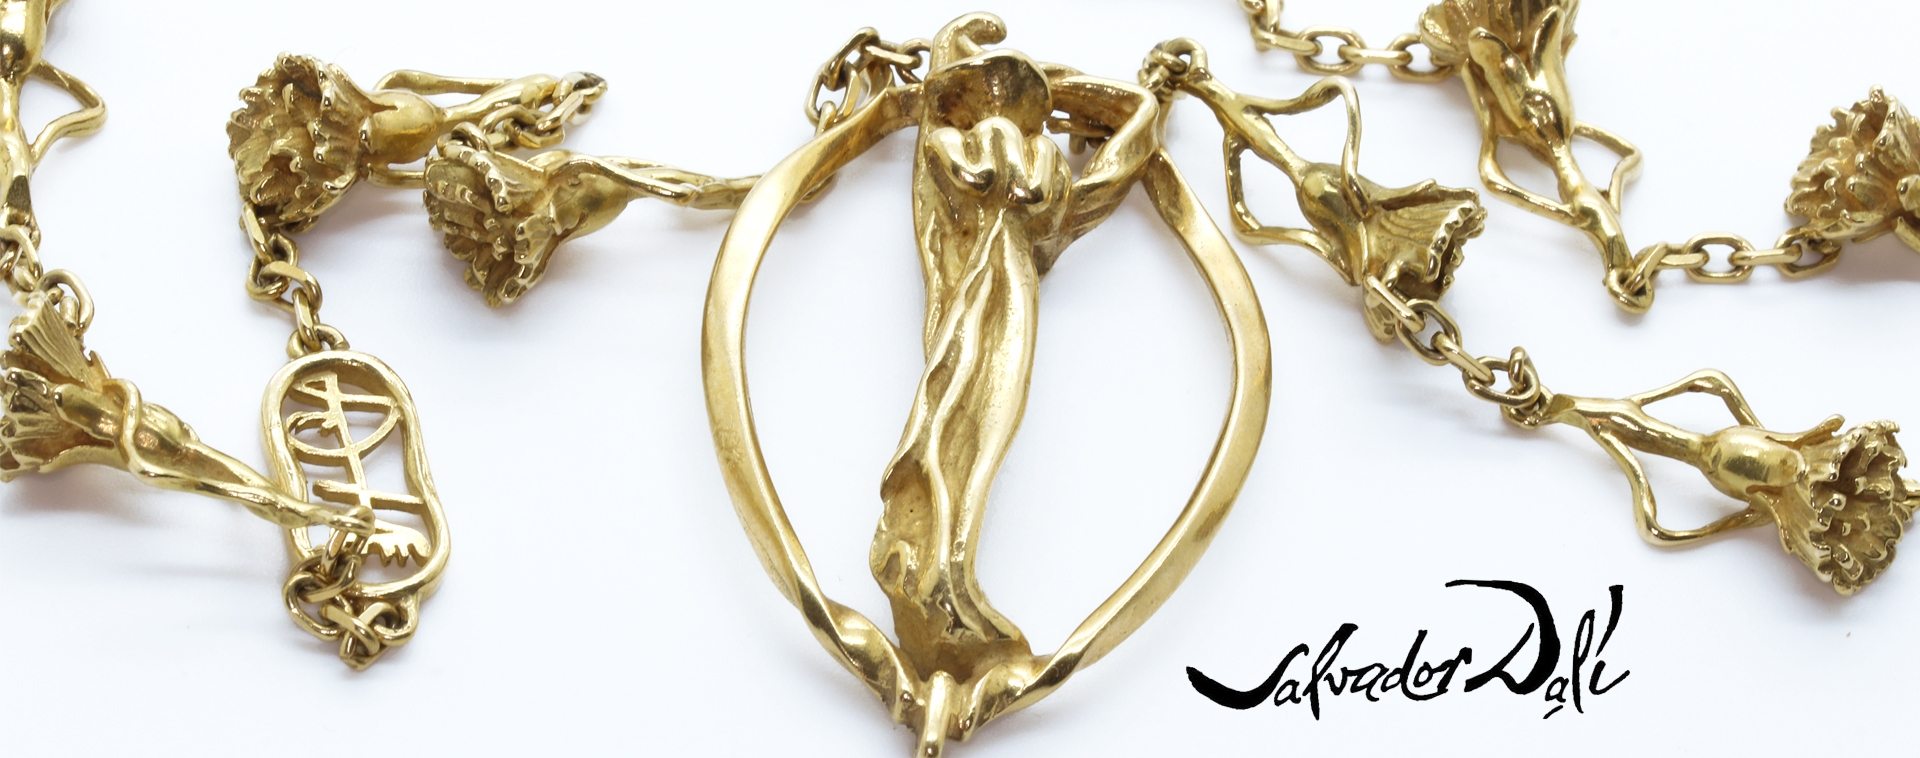 Salvador Dali Limited Edition Gold Figurine Necklace